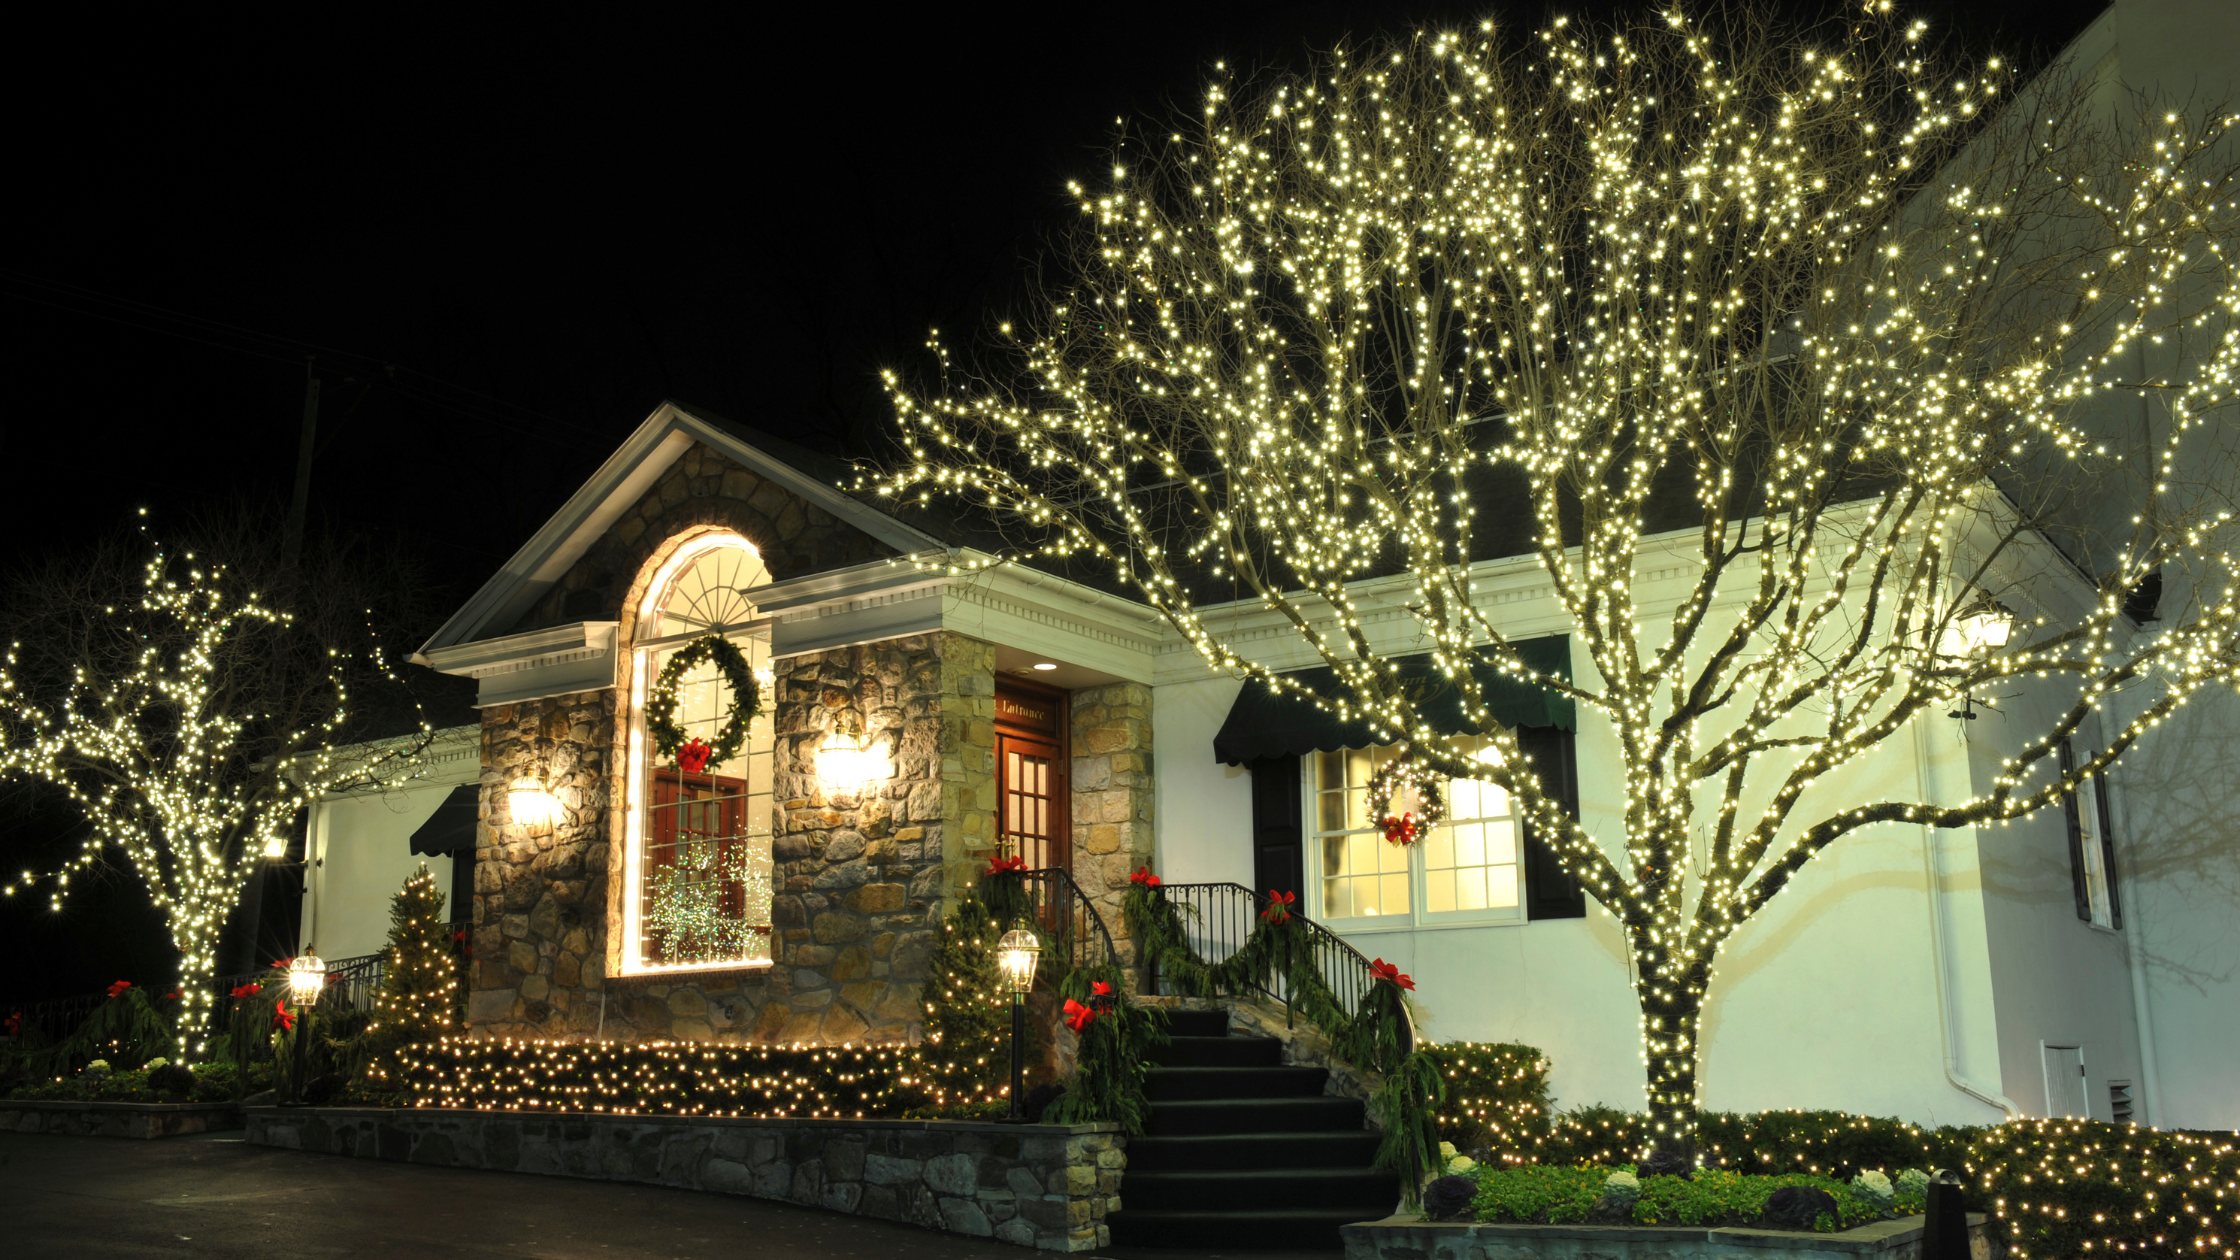 Holiday Lights, Christmas lights, decoration